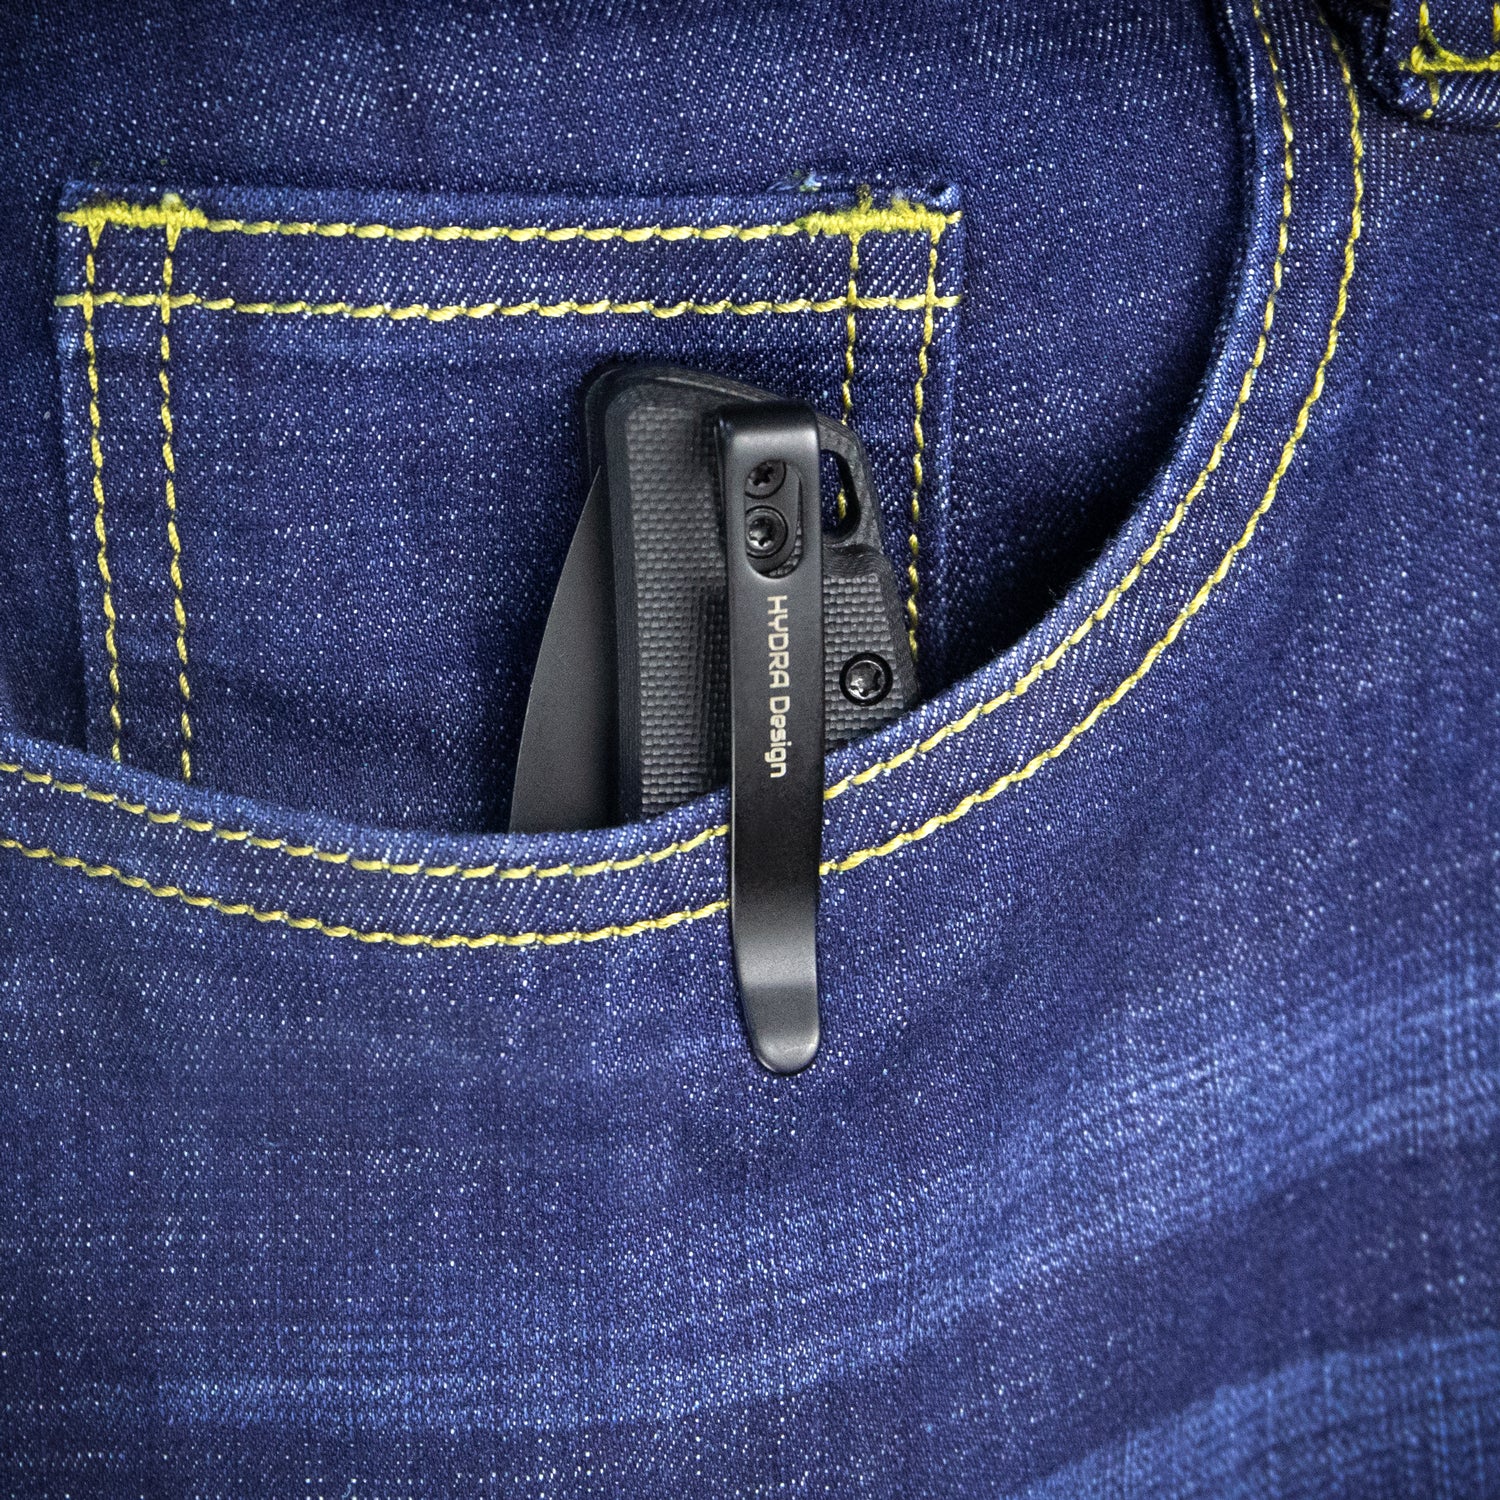 Kubey RDF Klappmesser Pocket Knife with Button Lock, Full-Contoured Black G-10 Handle 3.11" Blackwash AUS-10 Blade, Lightweight Hydra Designed Folding Knife for EDC KU316A